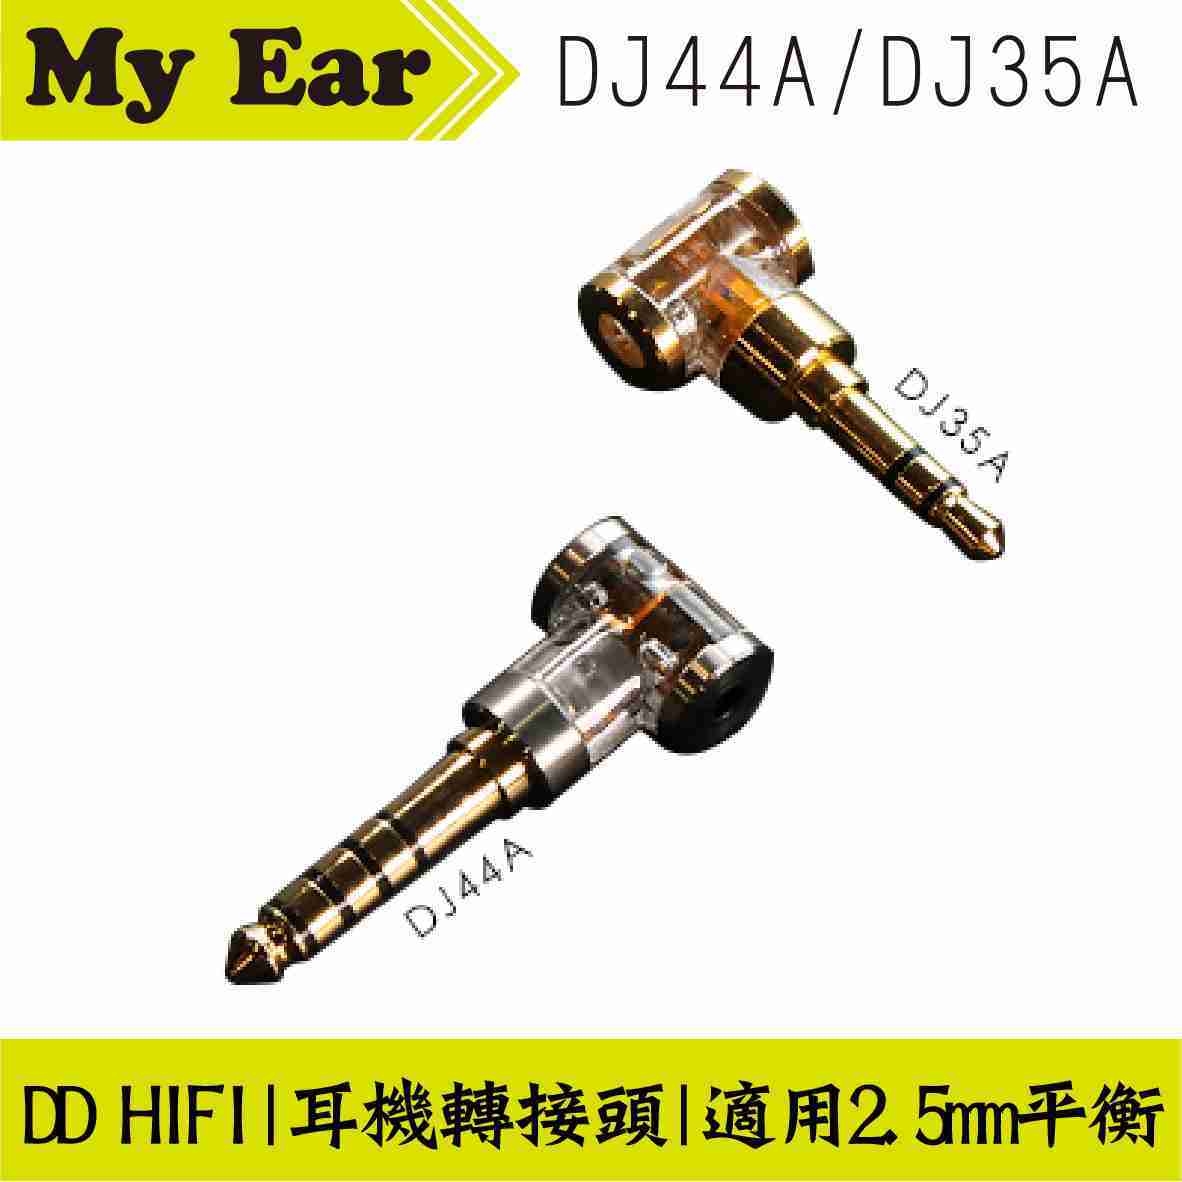 DD Hifi DJ44A/DJ35A/DJ44AG耳機端子 轉接頭 適用2.5mm平衡接頭 | My Ear耳機專門店